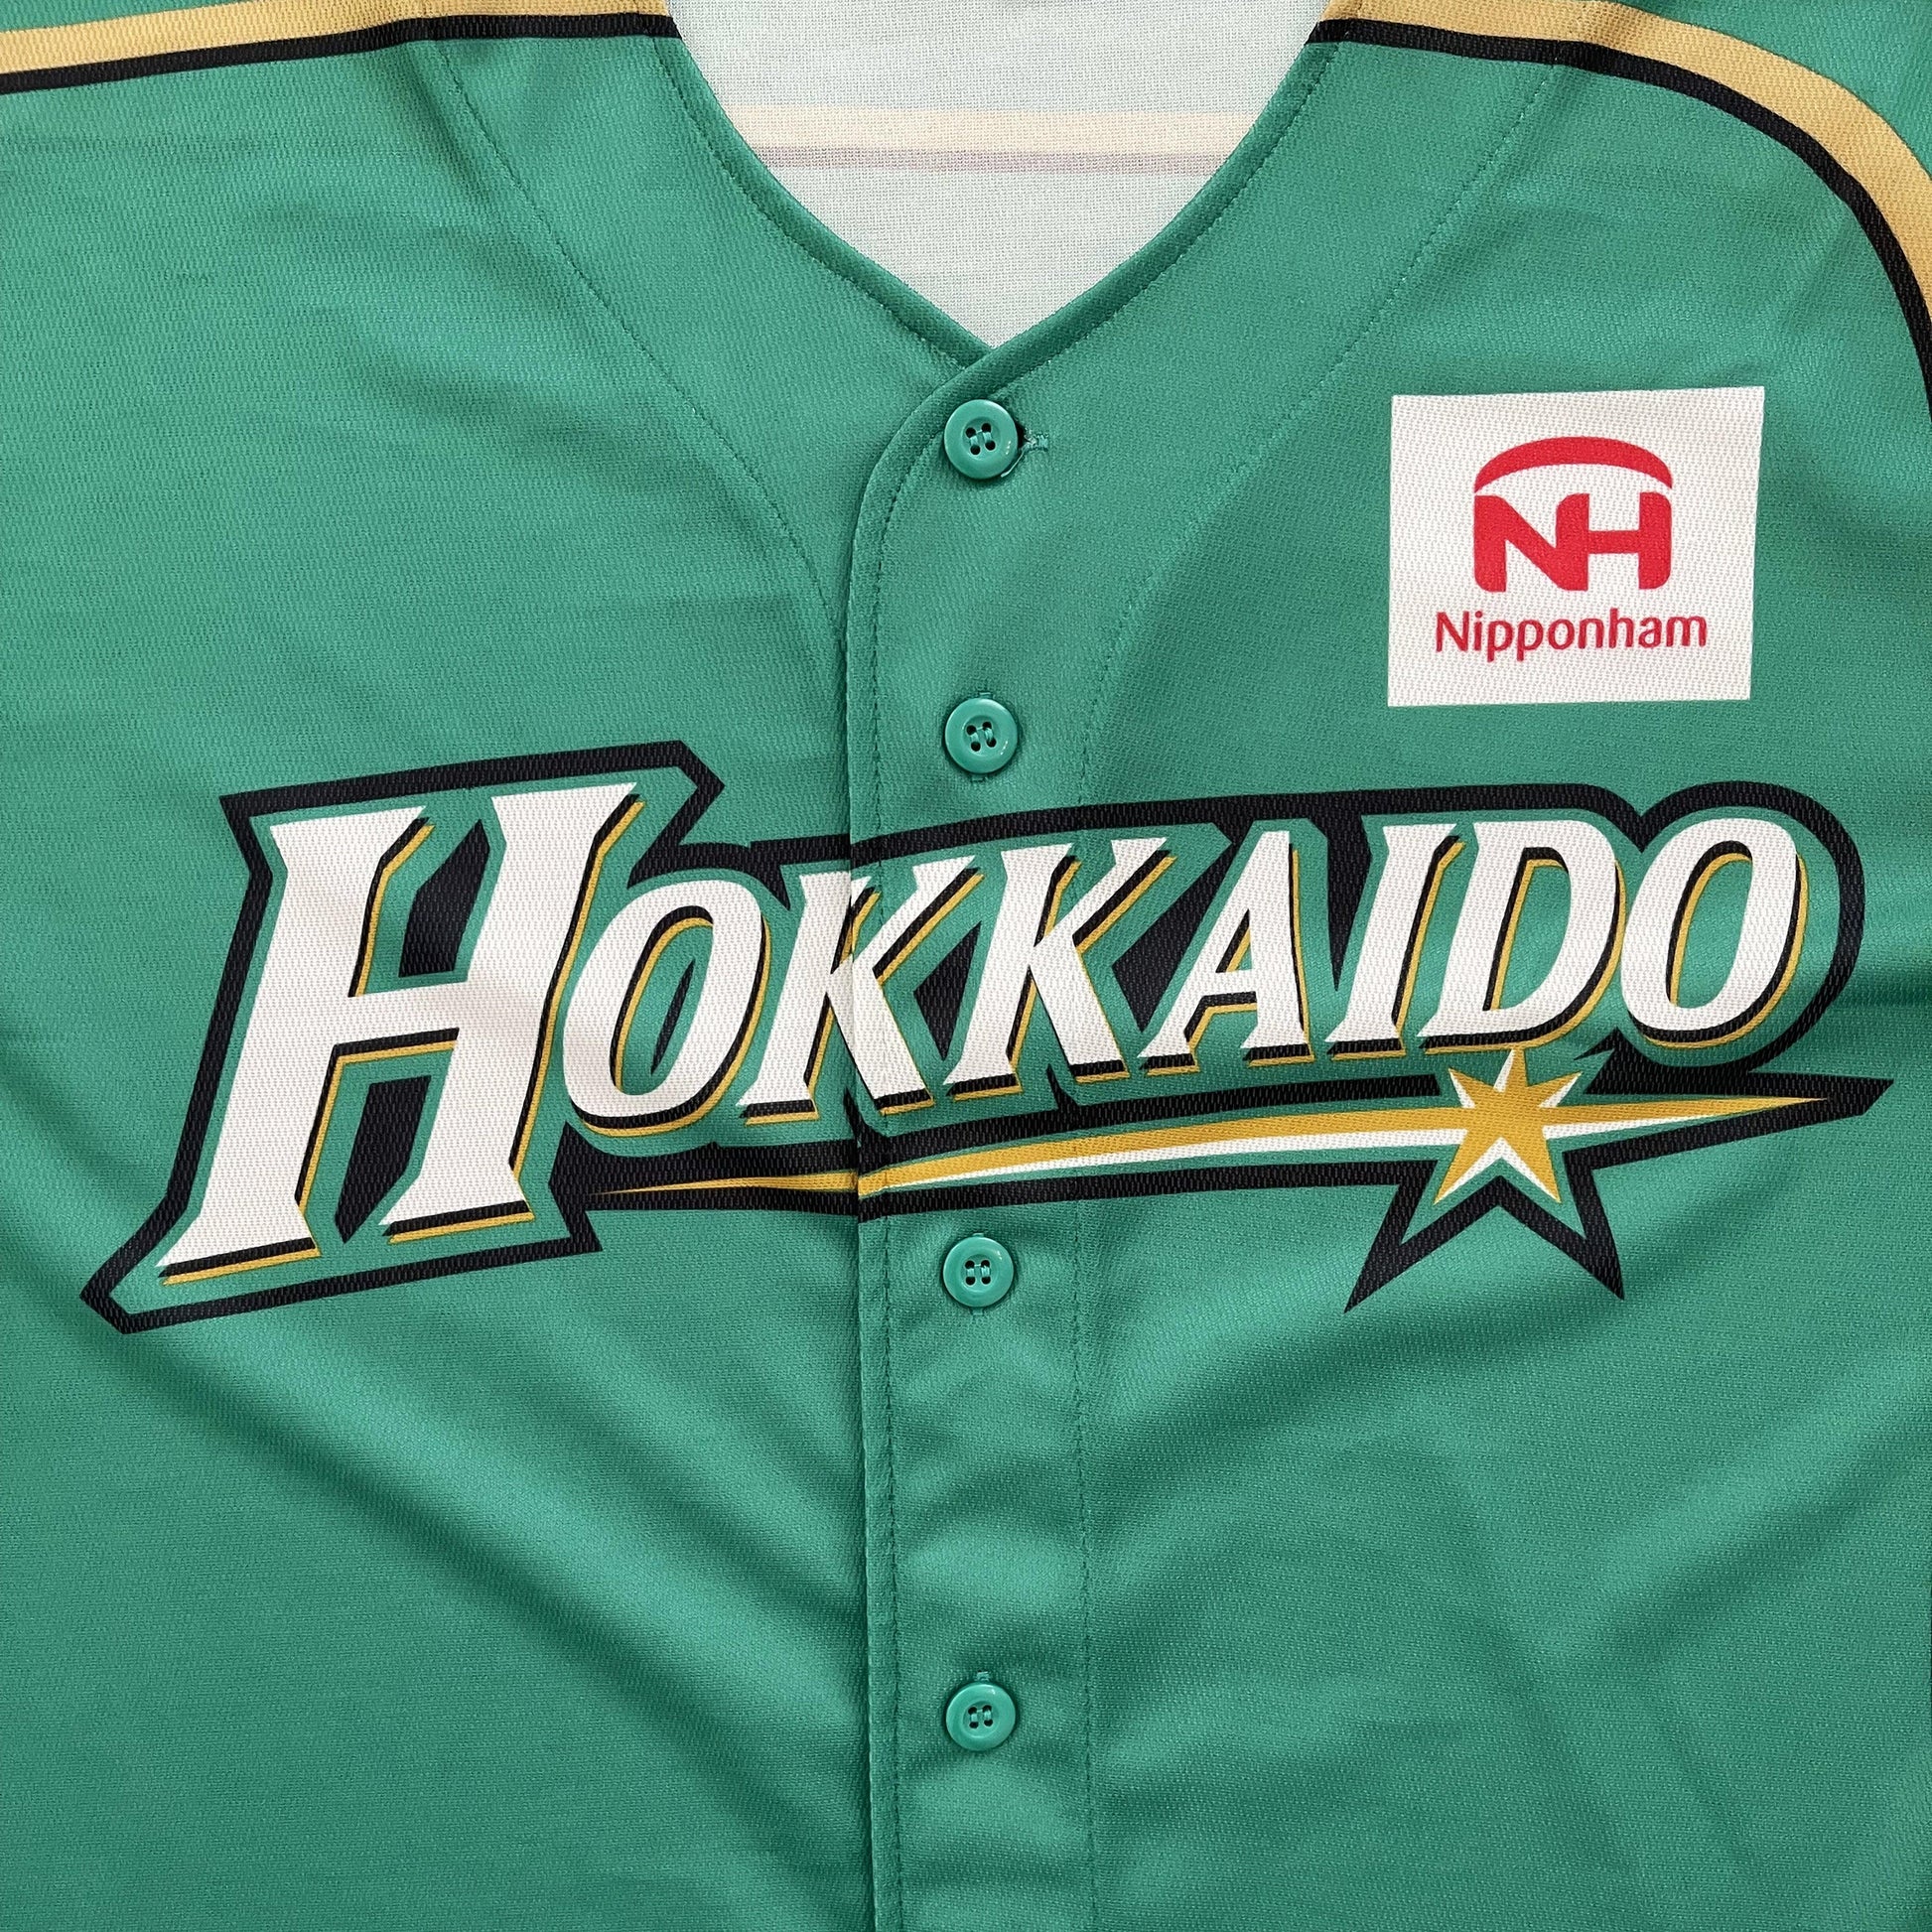 Japanese Baseball Jersey Hokkaido Fighters - L - Known Source